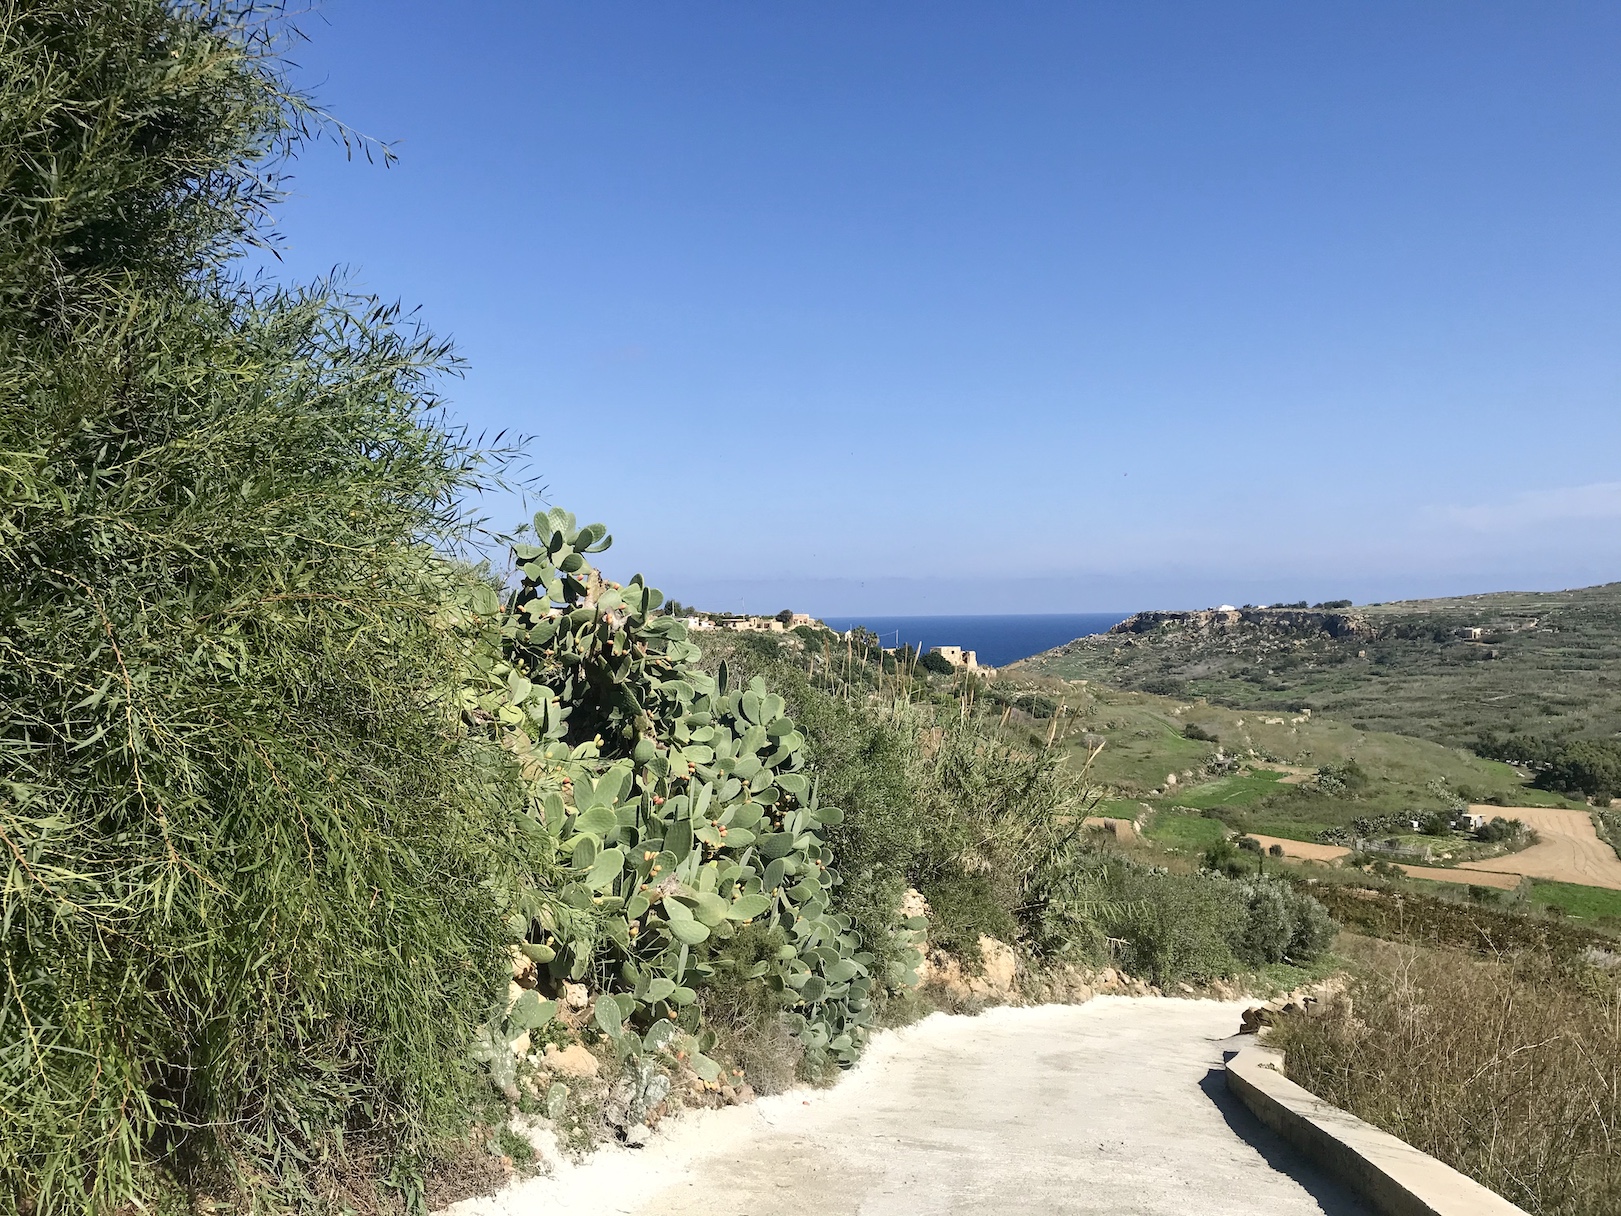 Rural road leading to the beach in Gozo, Malta